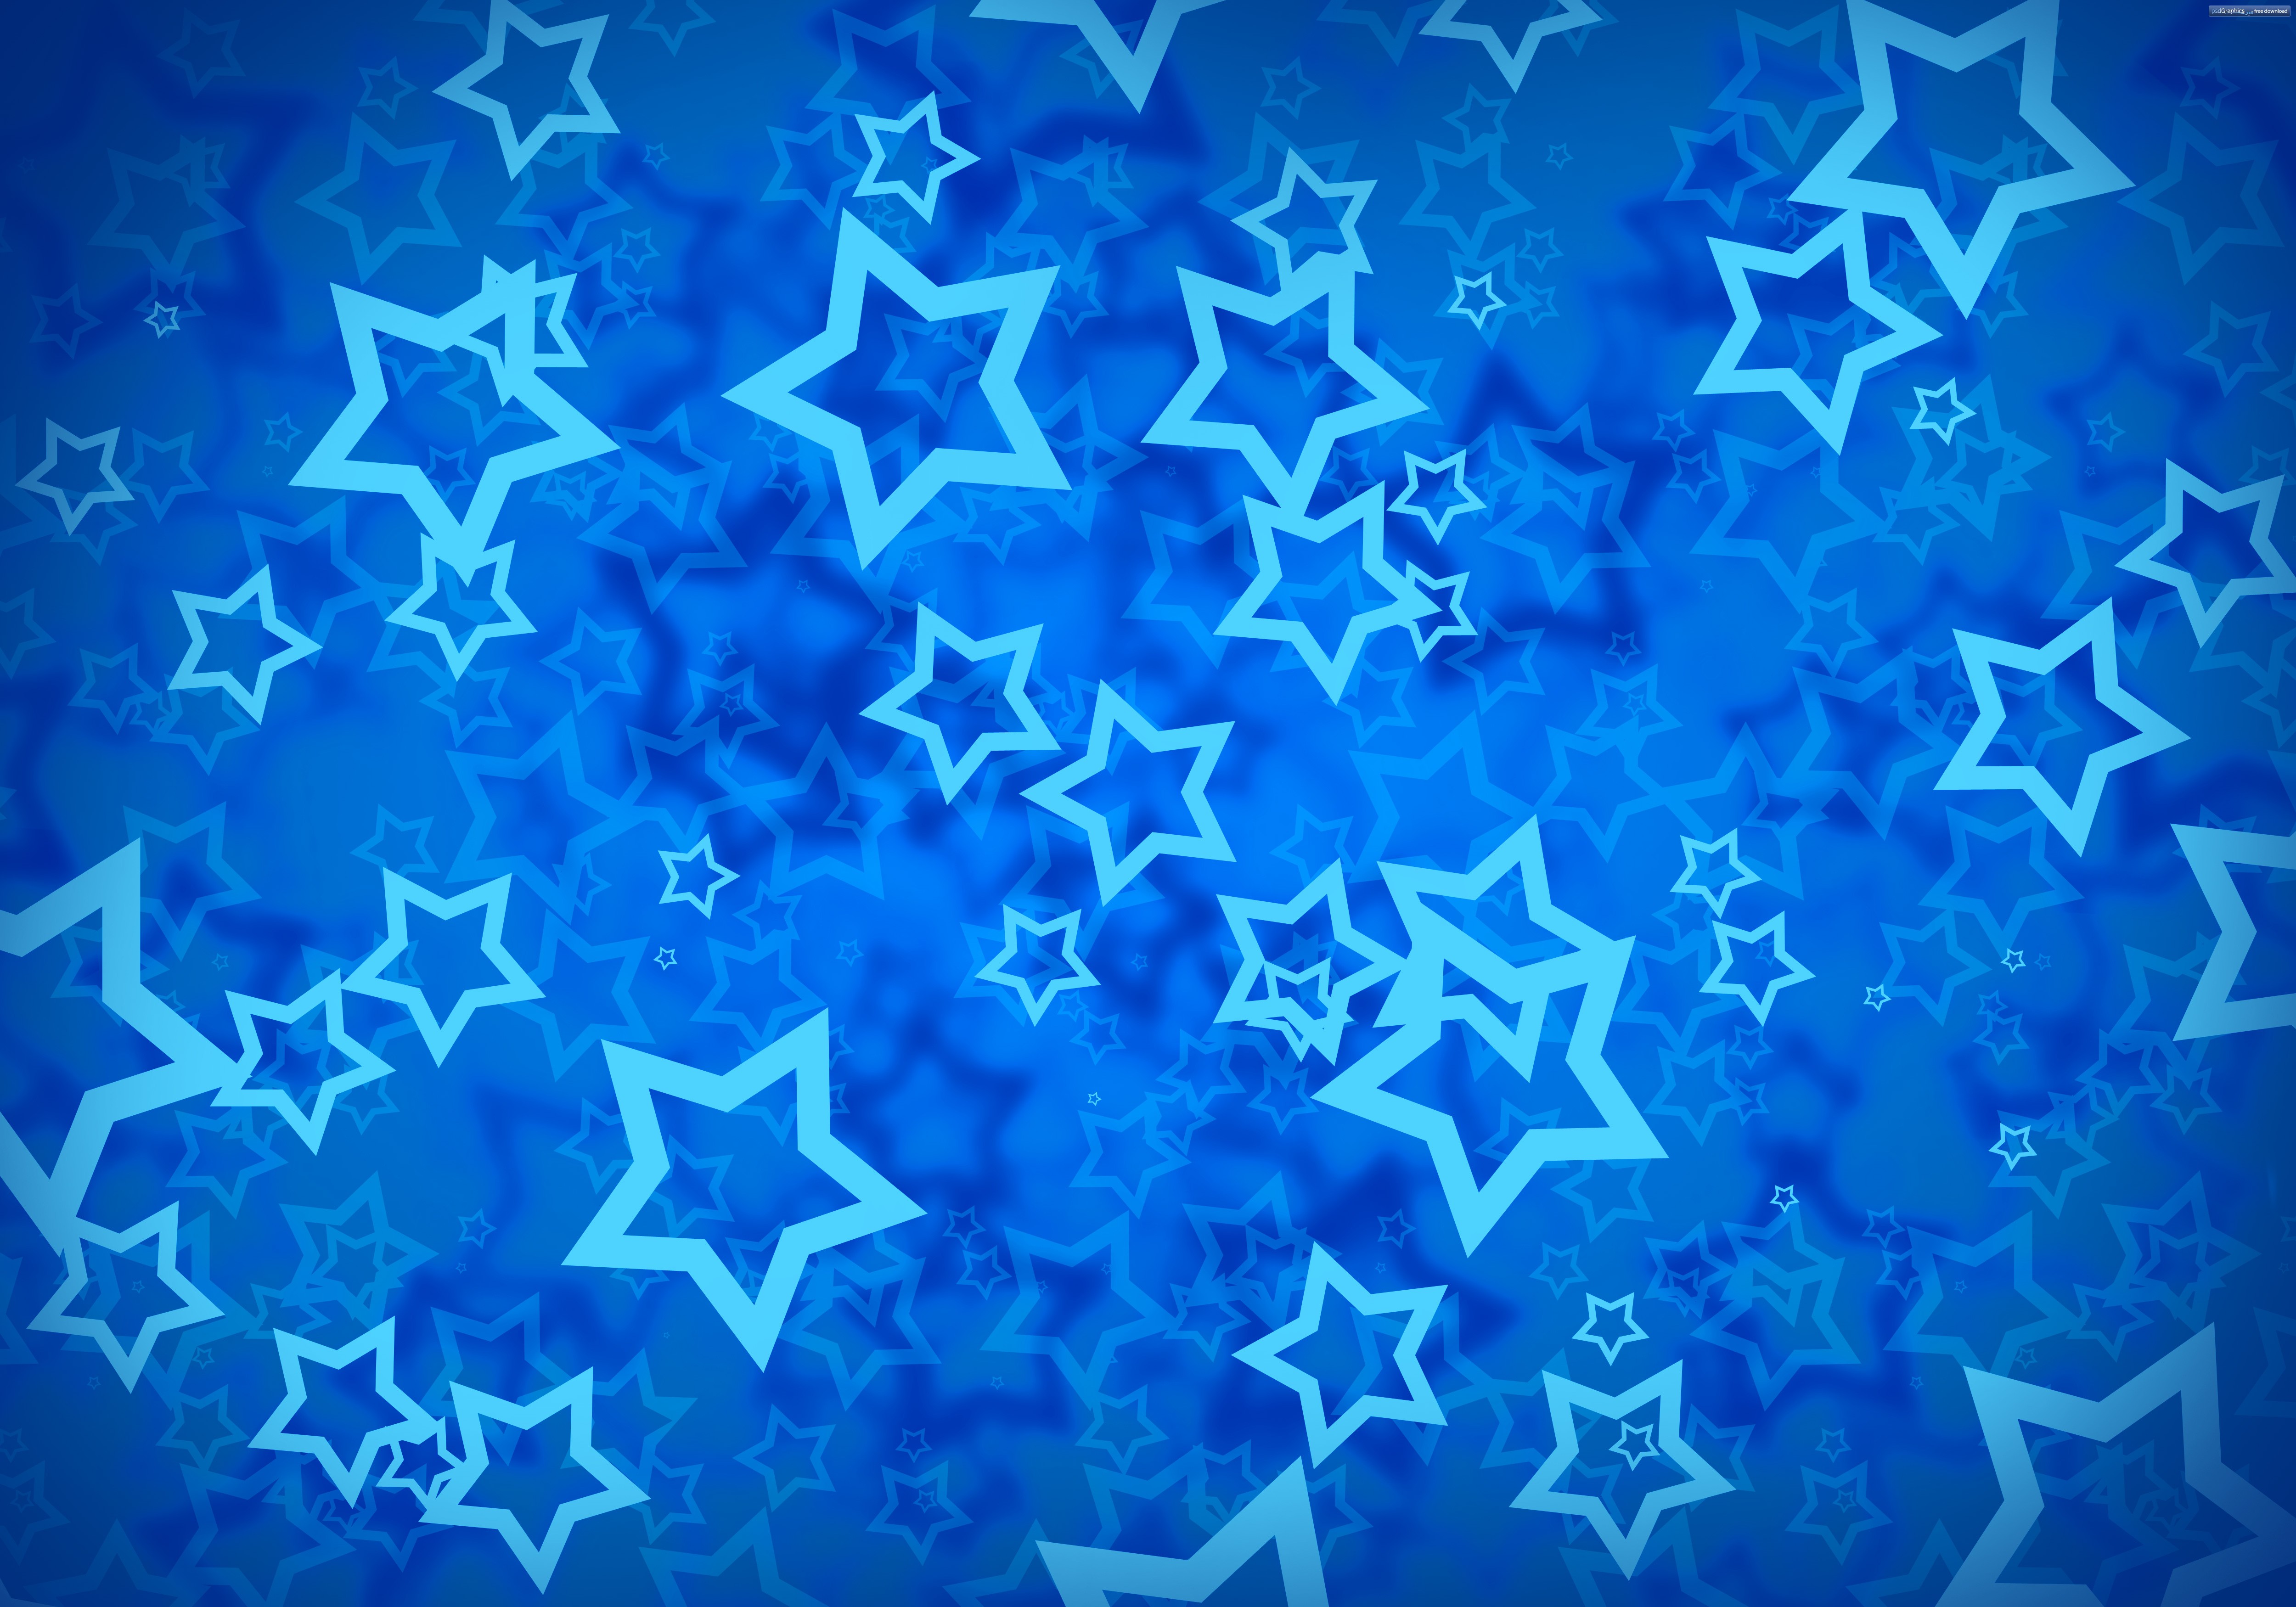 General 5000x3500 stars digital art blue background texture pattern